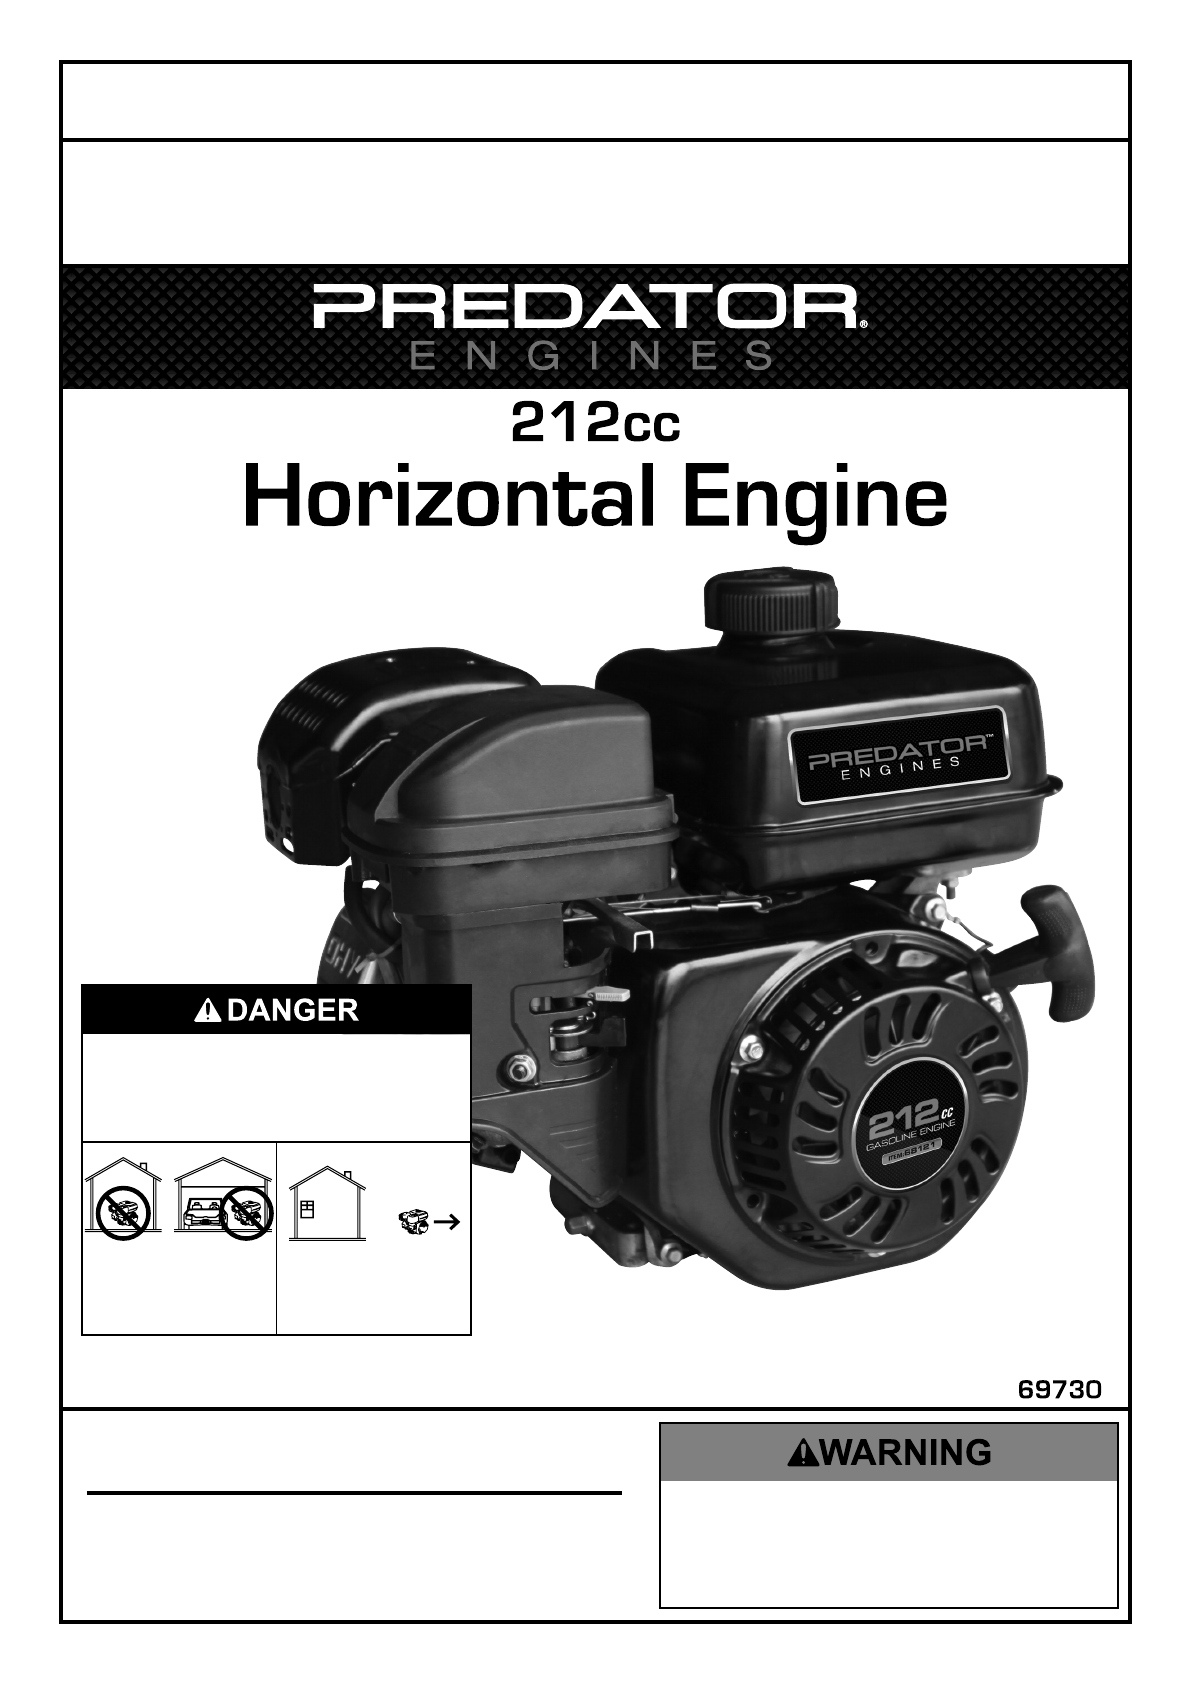 predator: Predator Engines Website